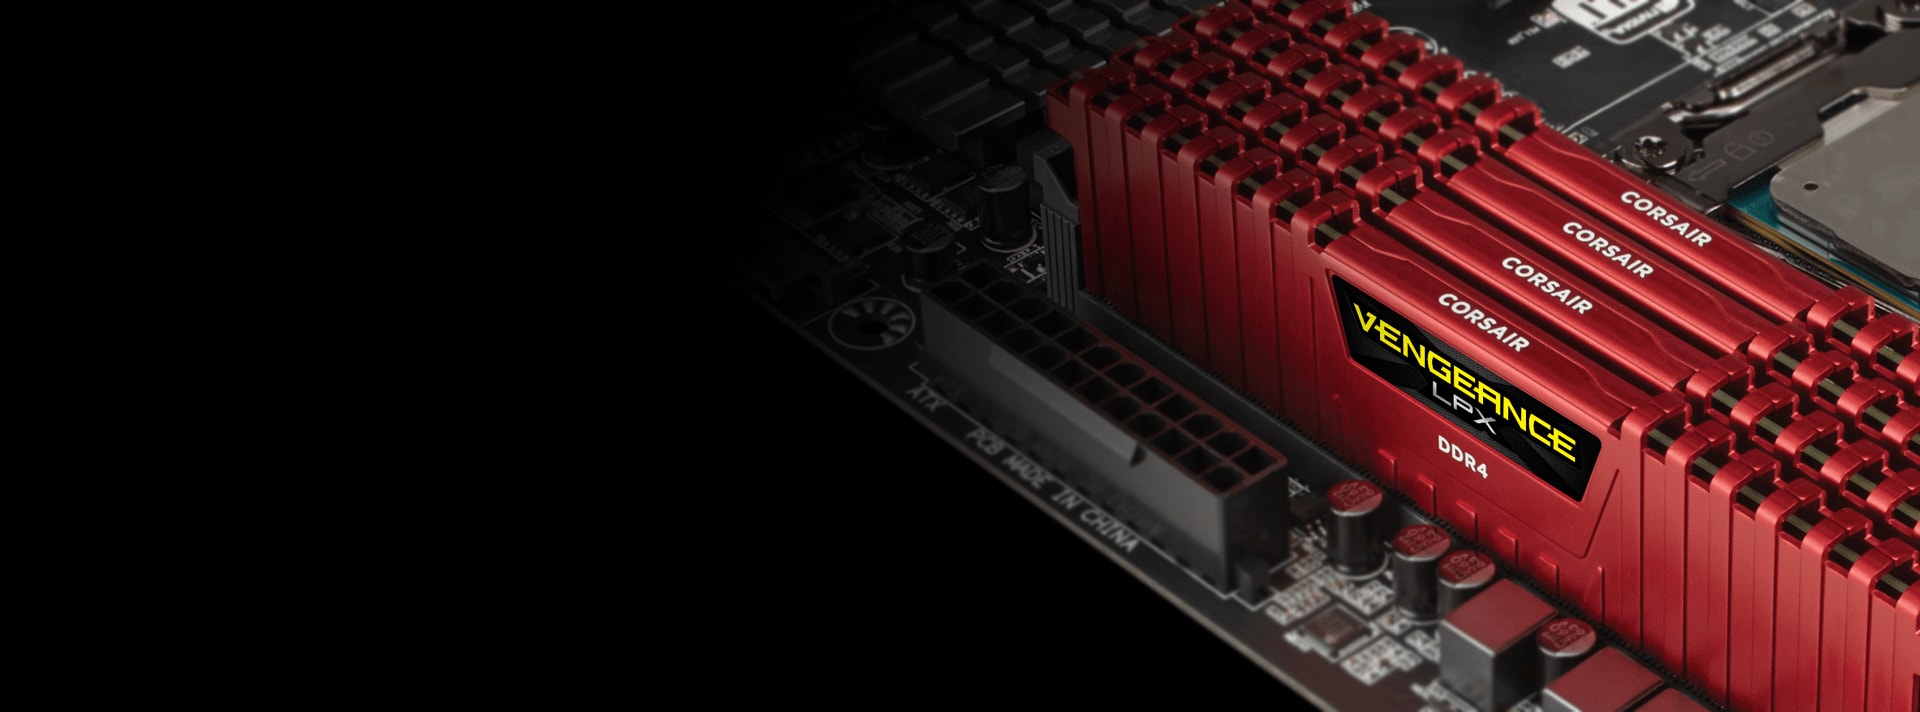 Corsair Vengeance LPX 16GB (2x8GB) DDR4 3200MHz C16 XMP 2.0 High  Performance Memory Kit – Red at